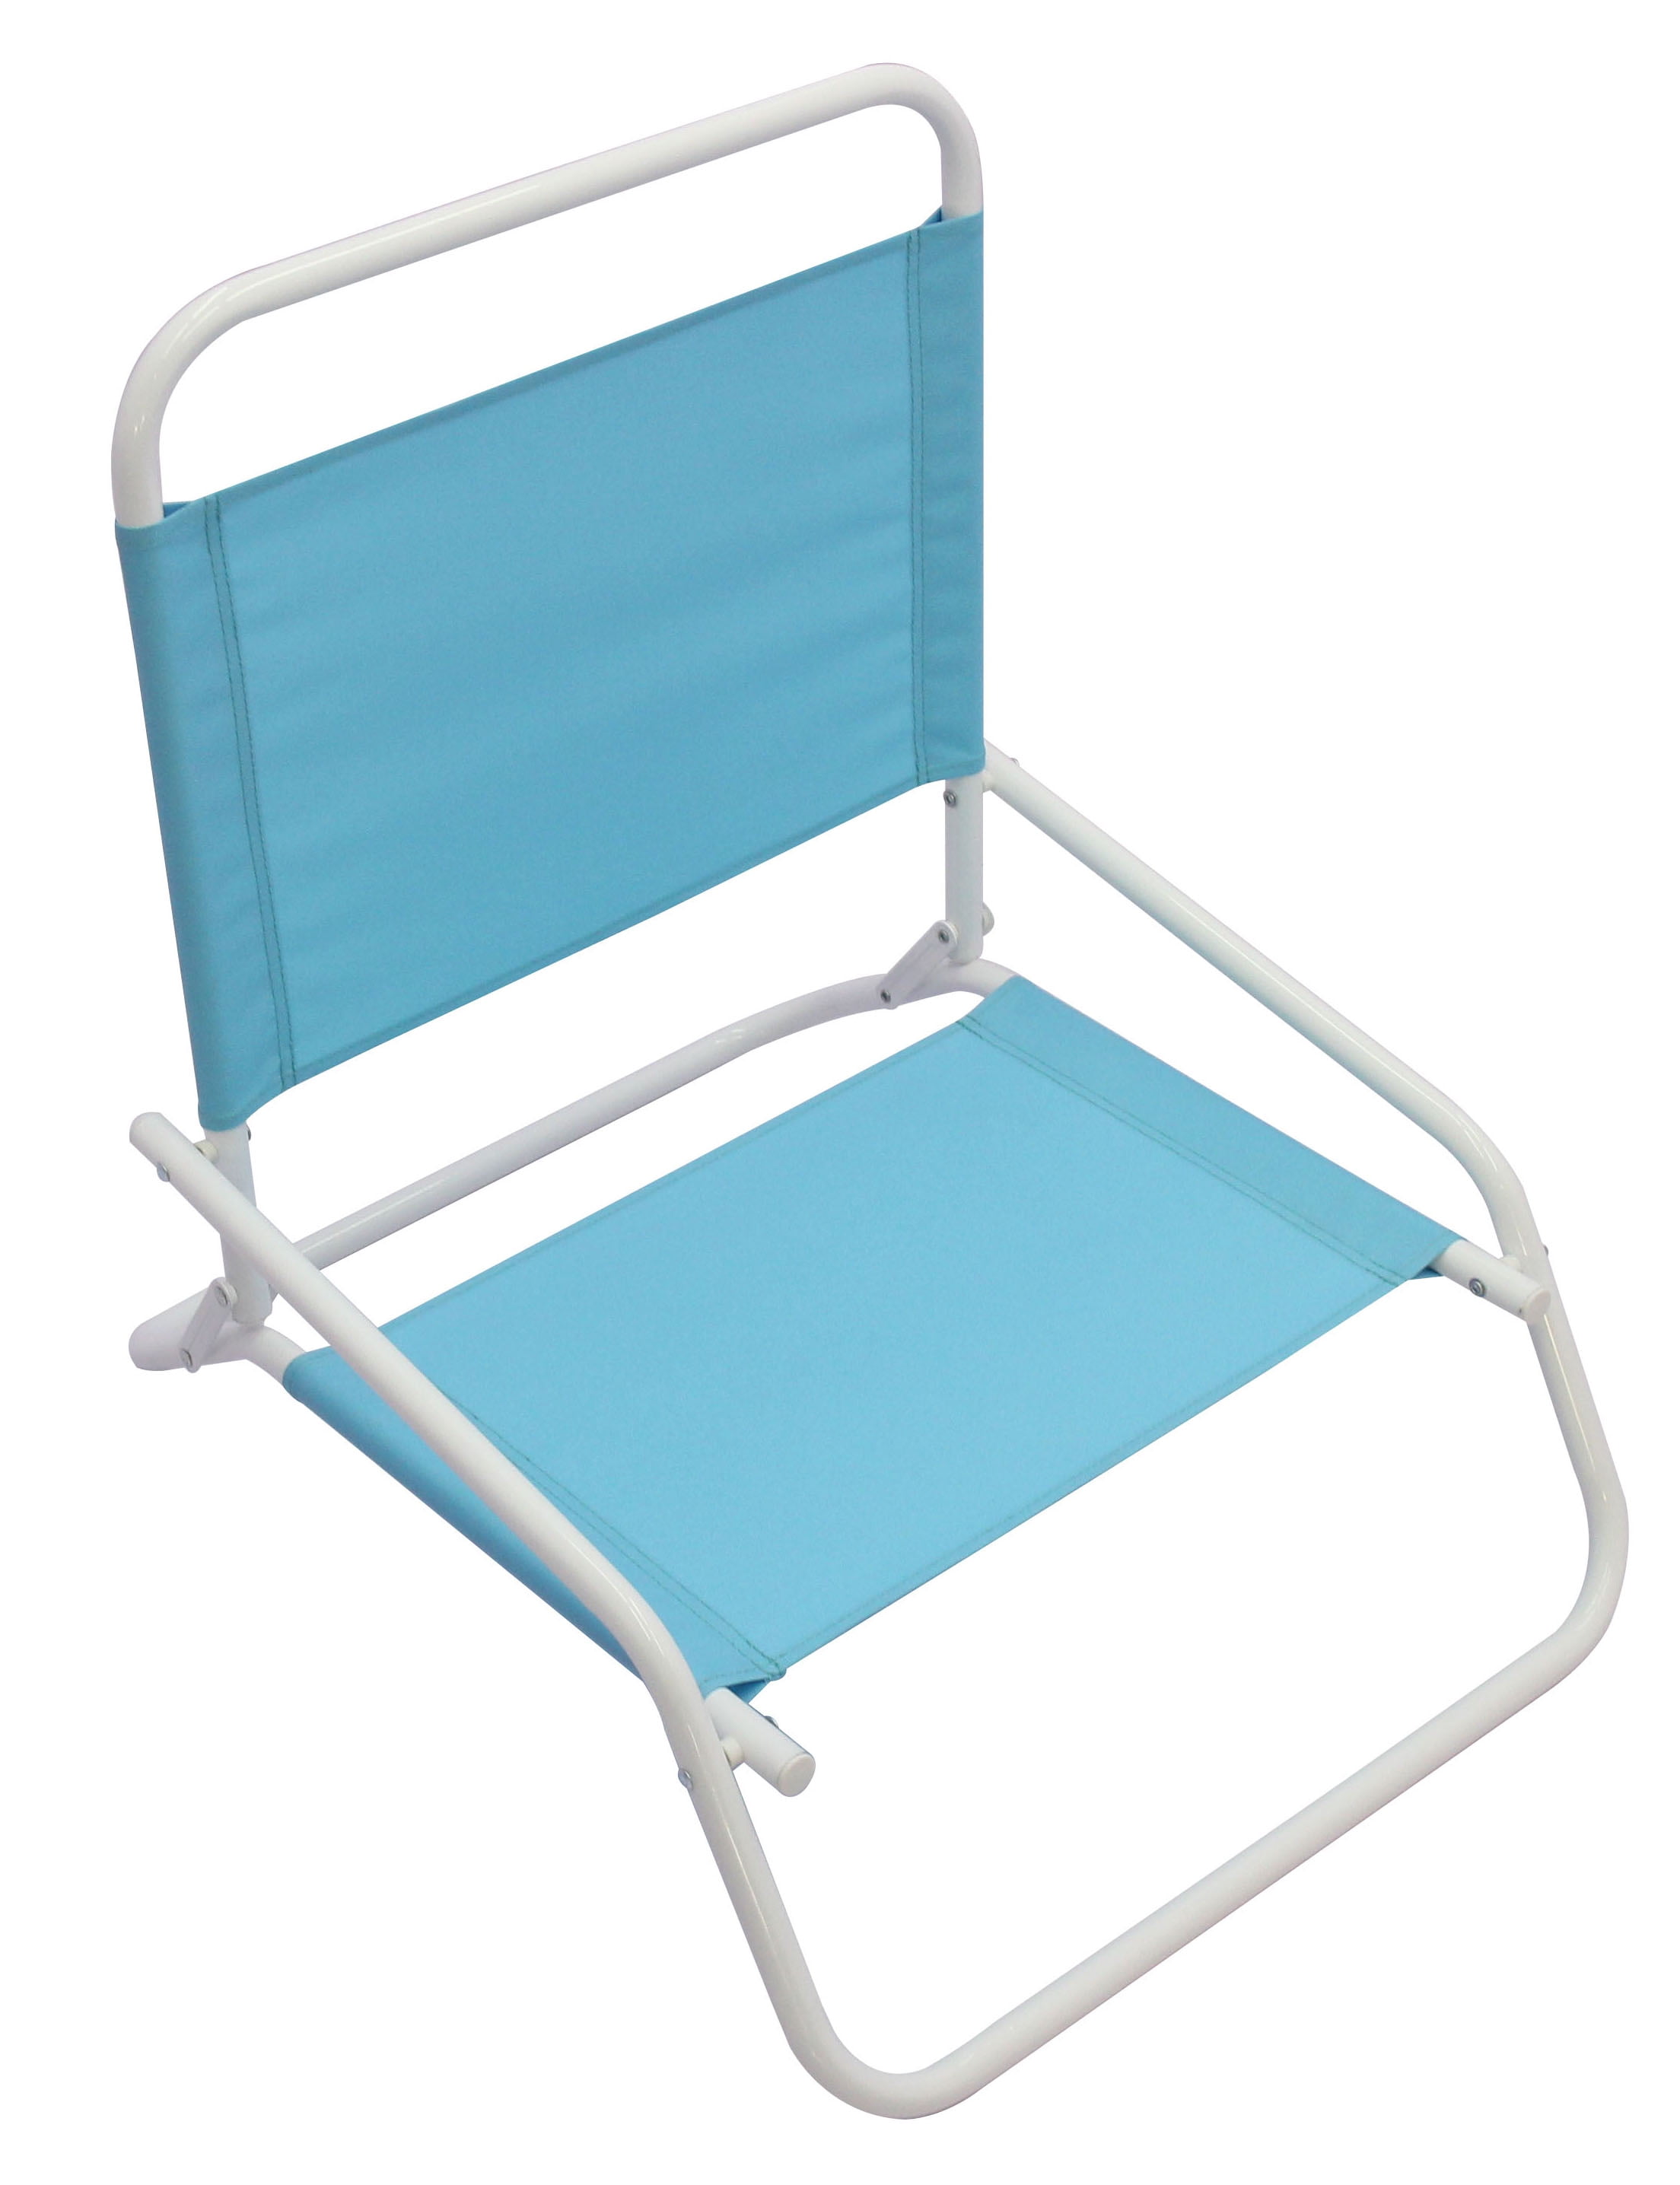 Mainstays 1-Position Folding Beach Chair, Turquoise - Walmart.com